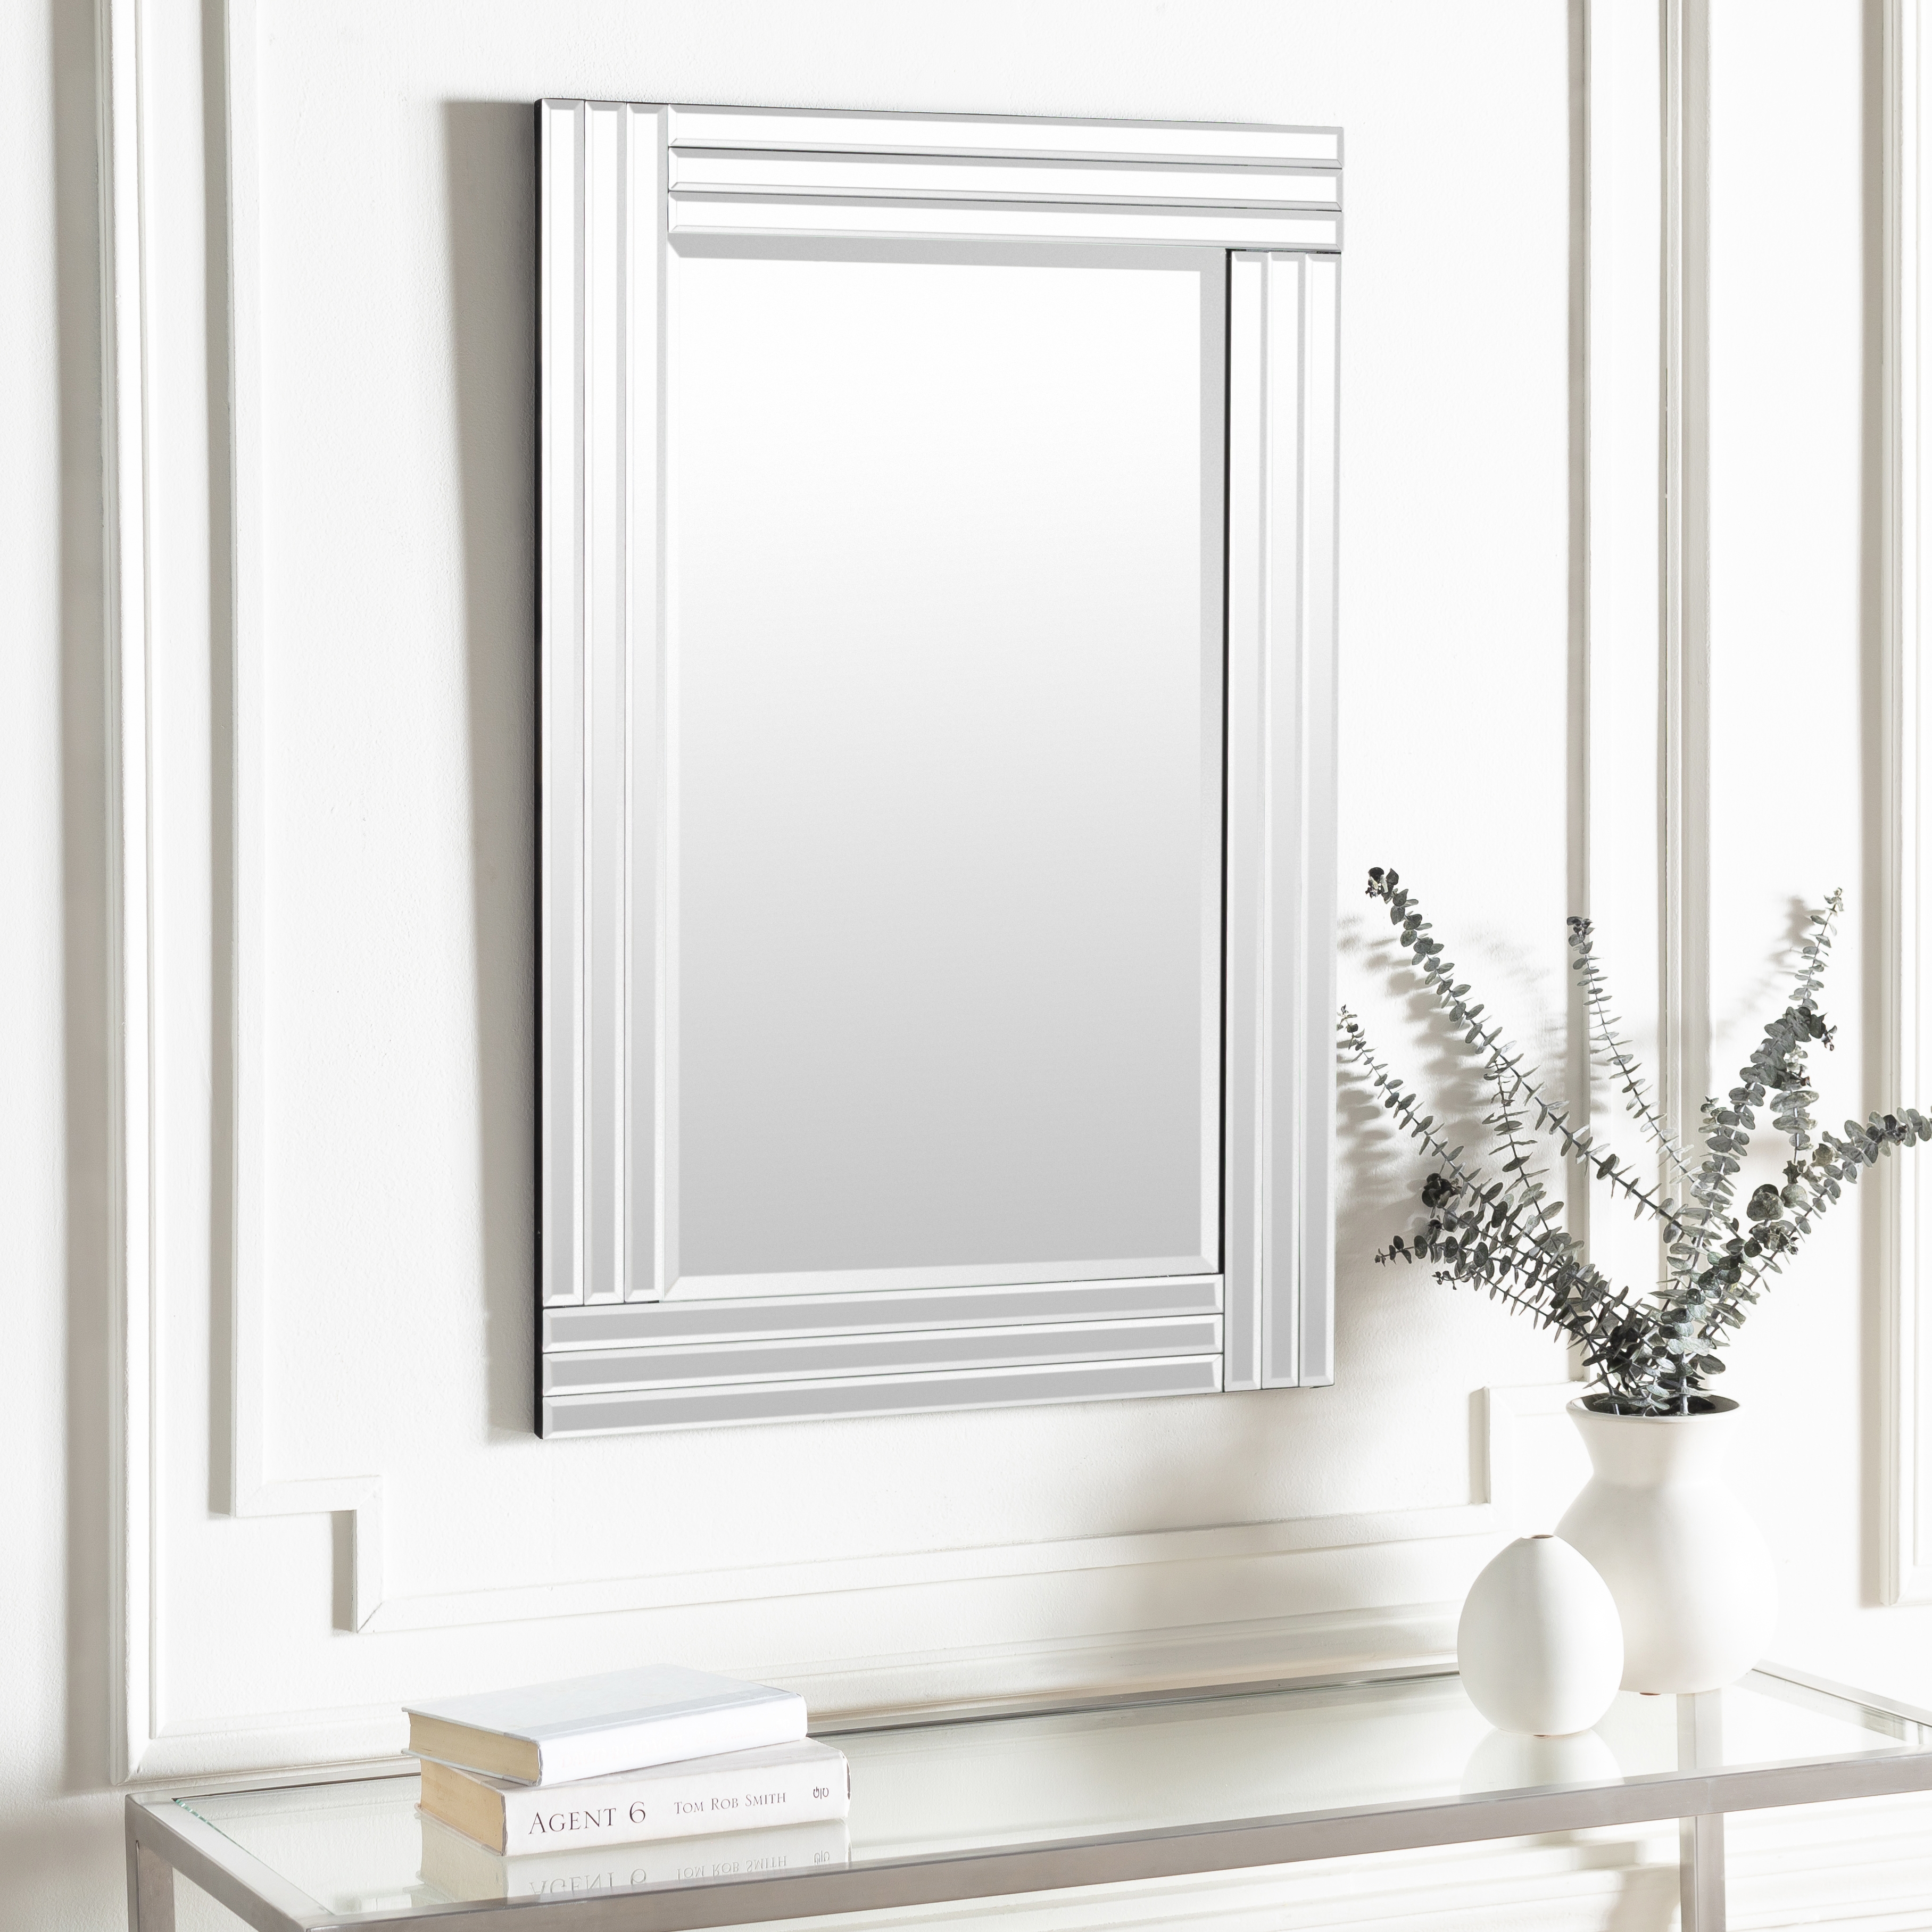 Seymore Mirror, 40"H x 30"W - Image 1